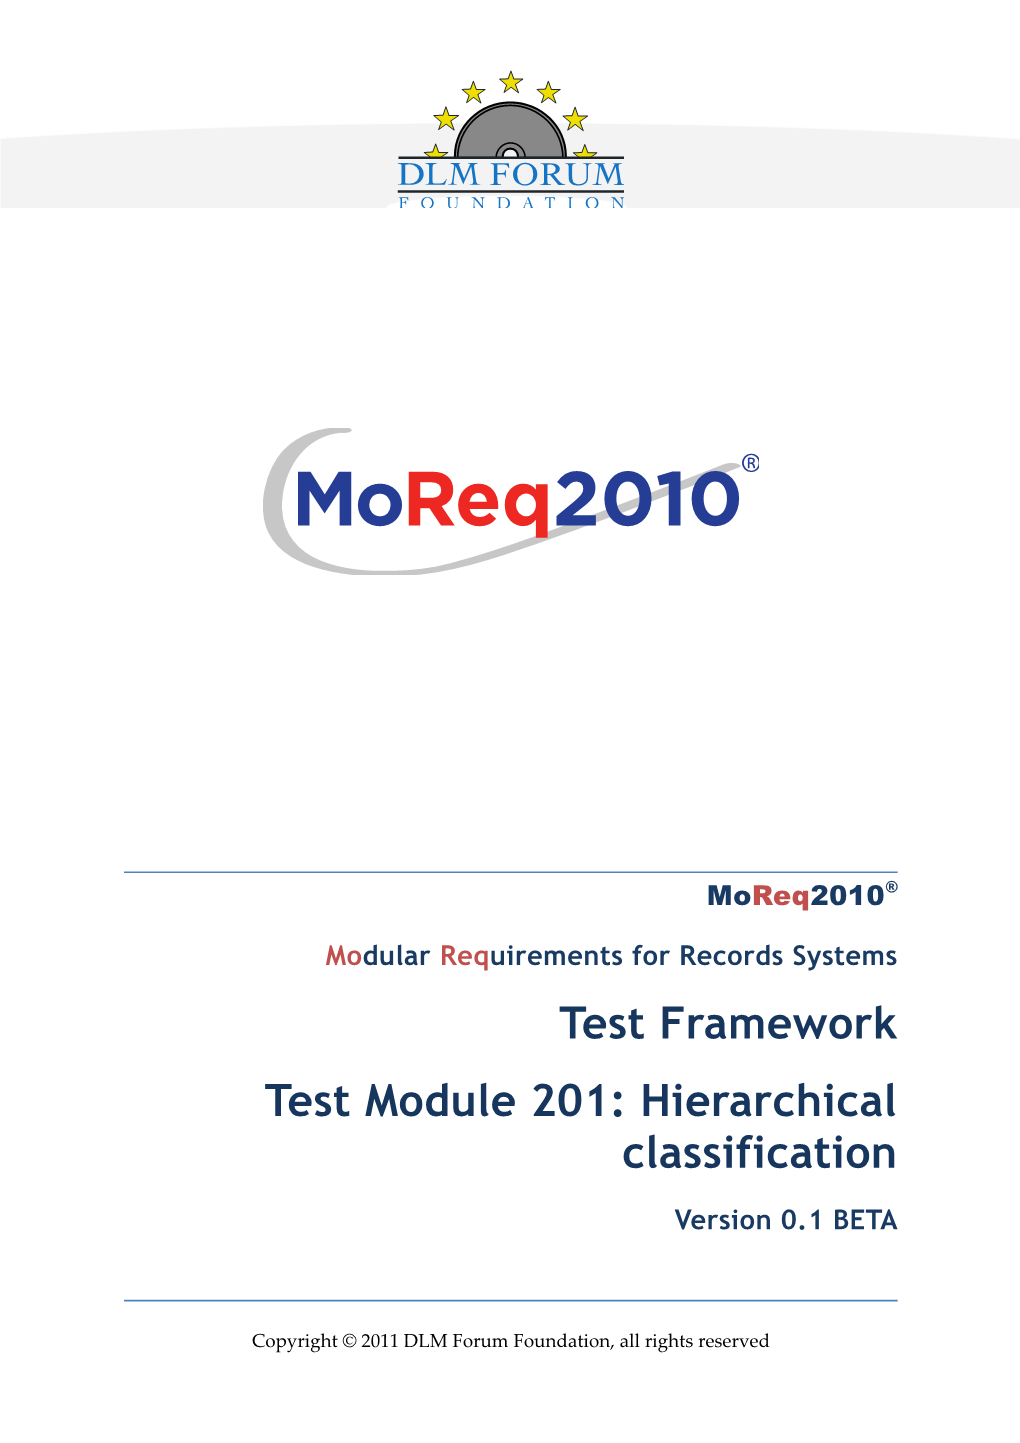 Test Module 201: Hierarchical Classification